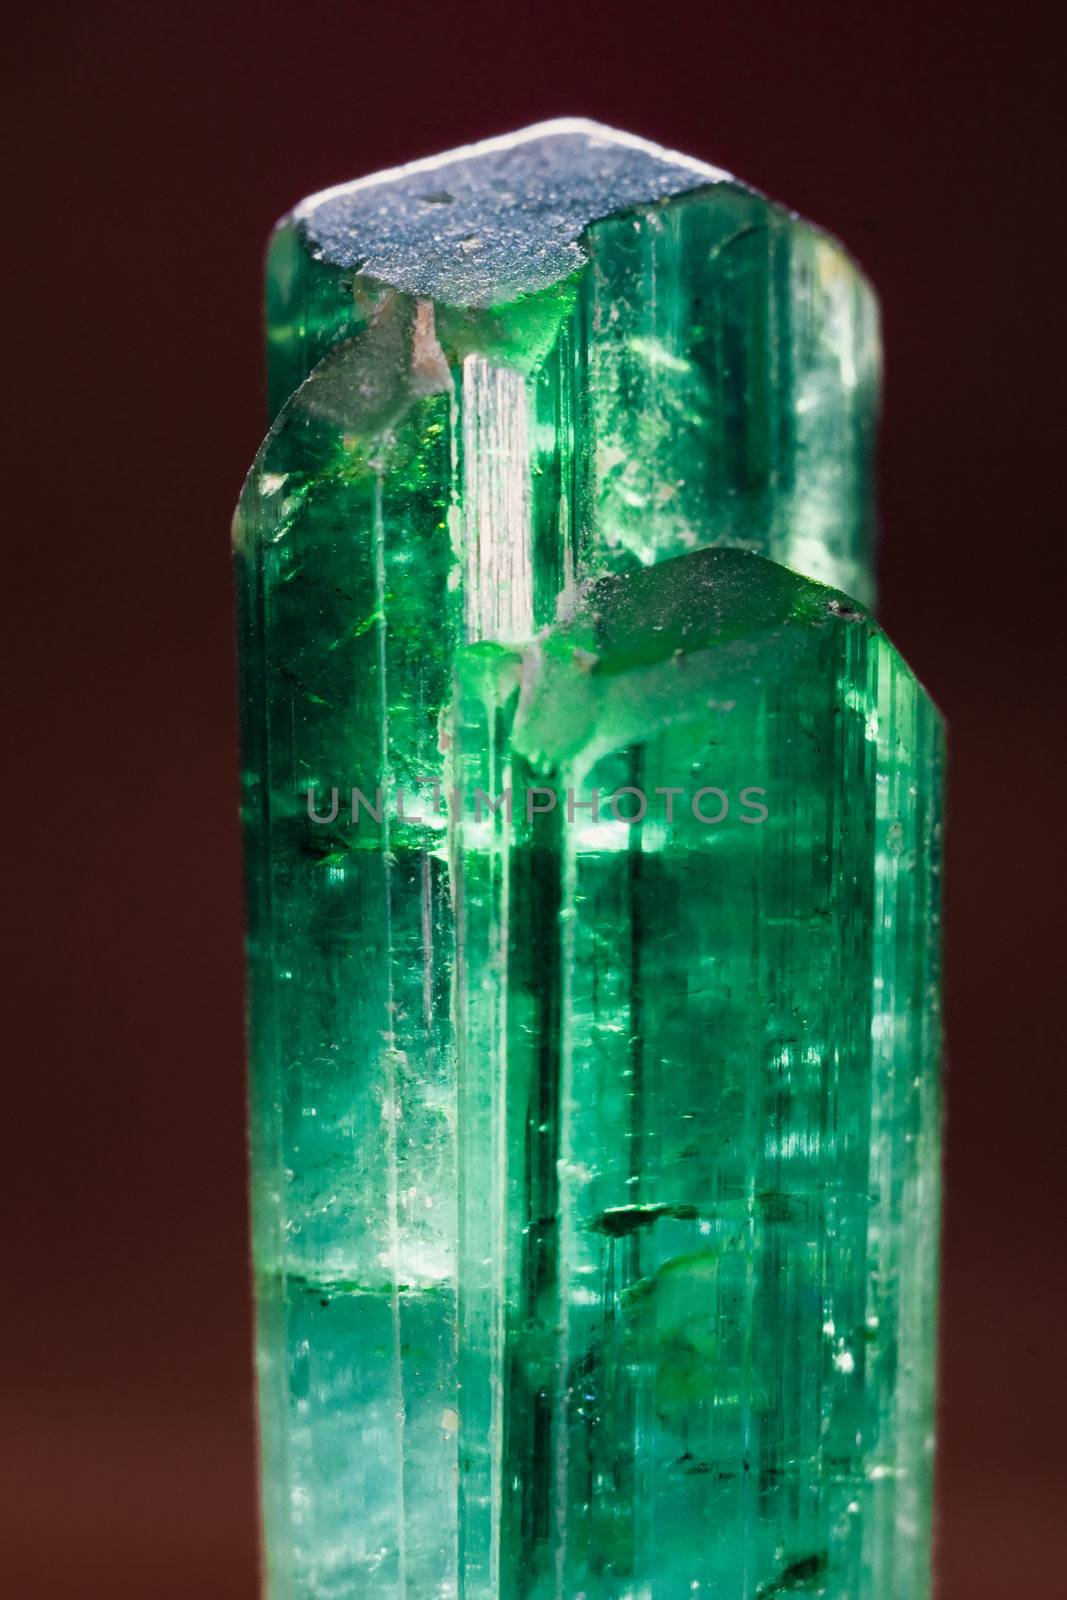 Rare uncut green turmaline gemstone from Pakistan by PiLens